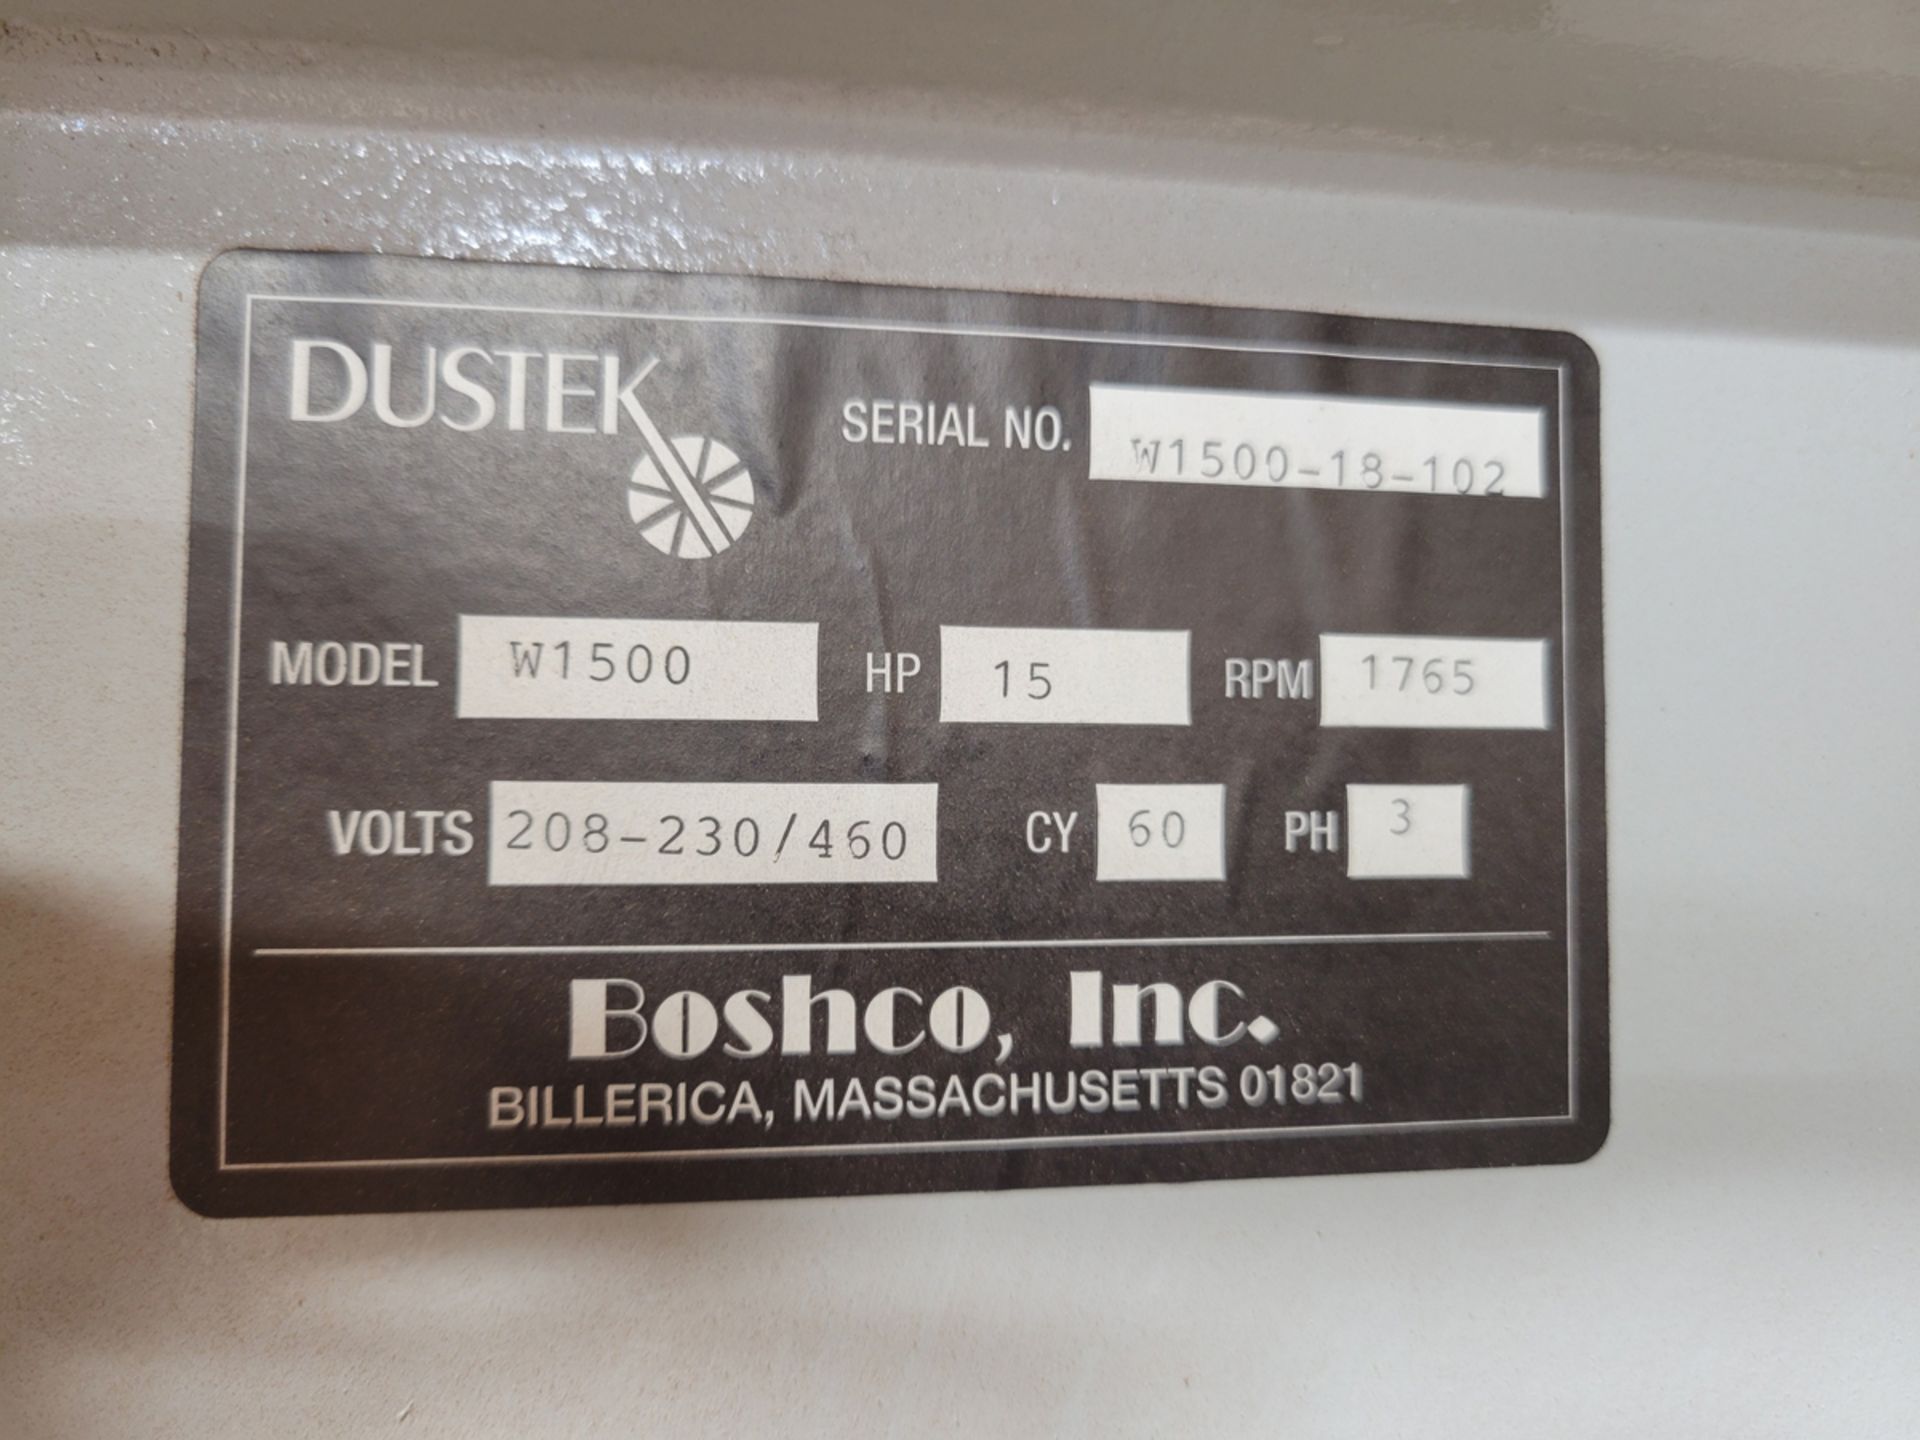 Dustek Whispurr Model: W1500 Dust Collector - Image 8 of 8